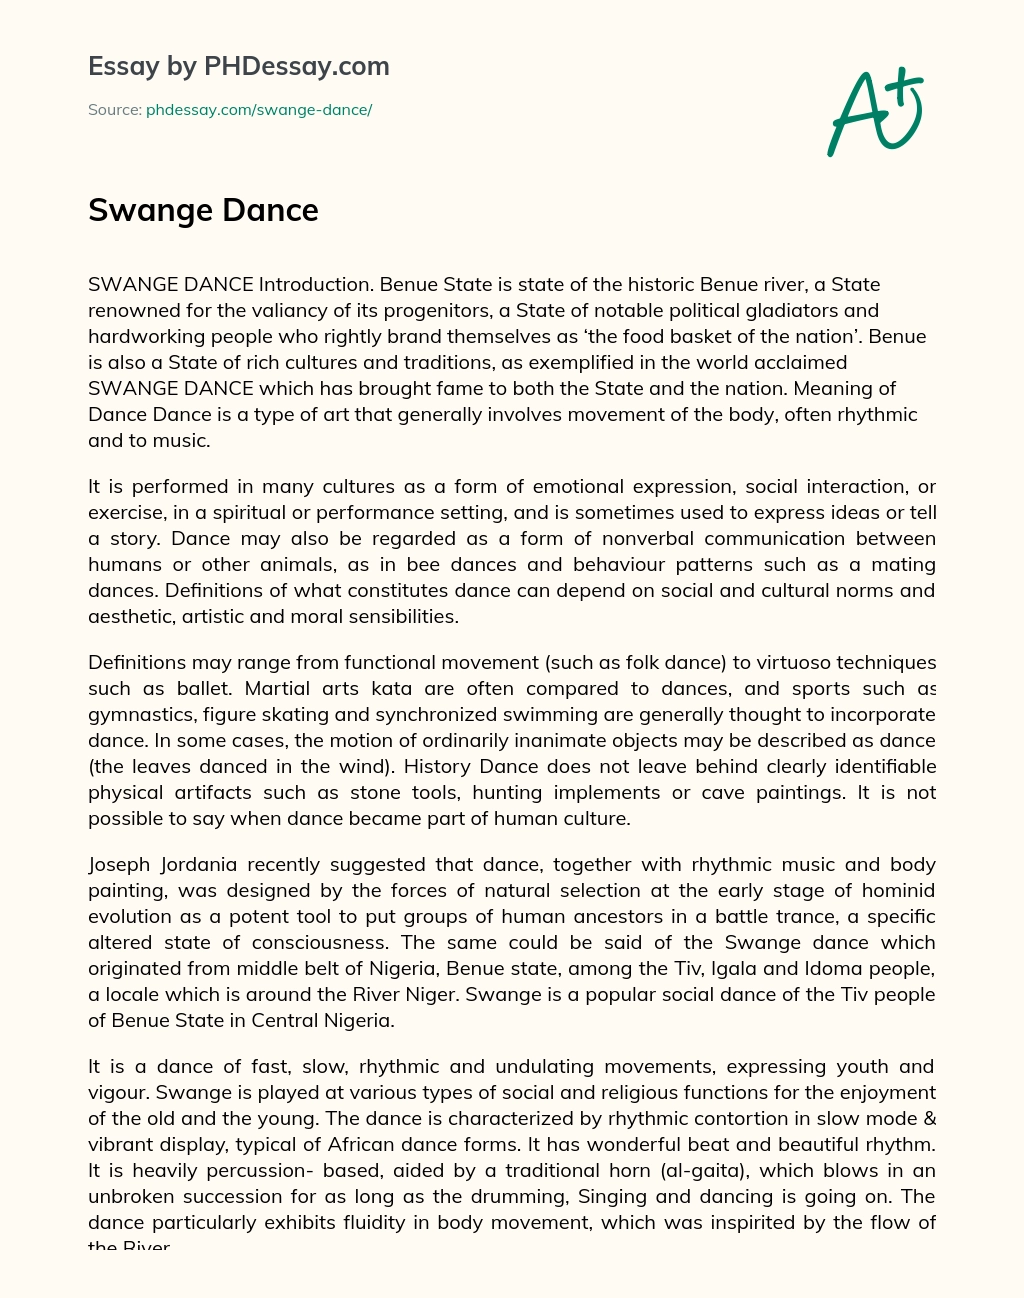 Swange Dance essay